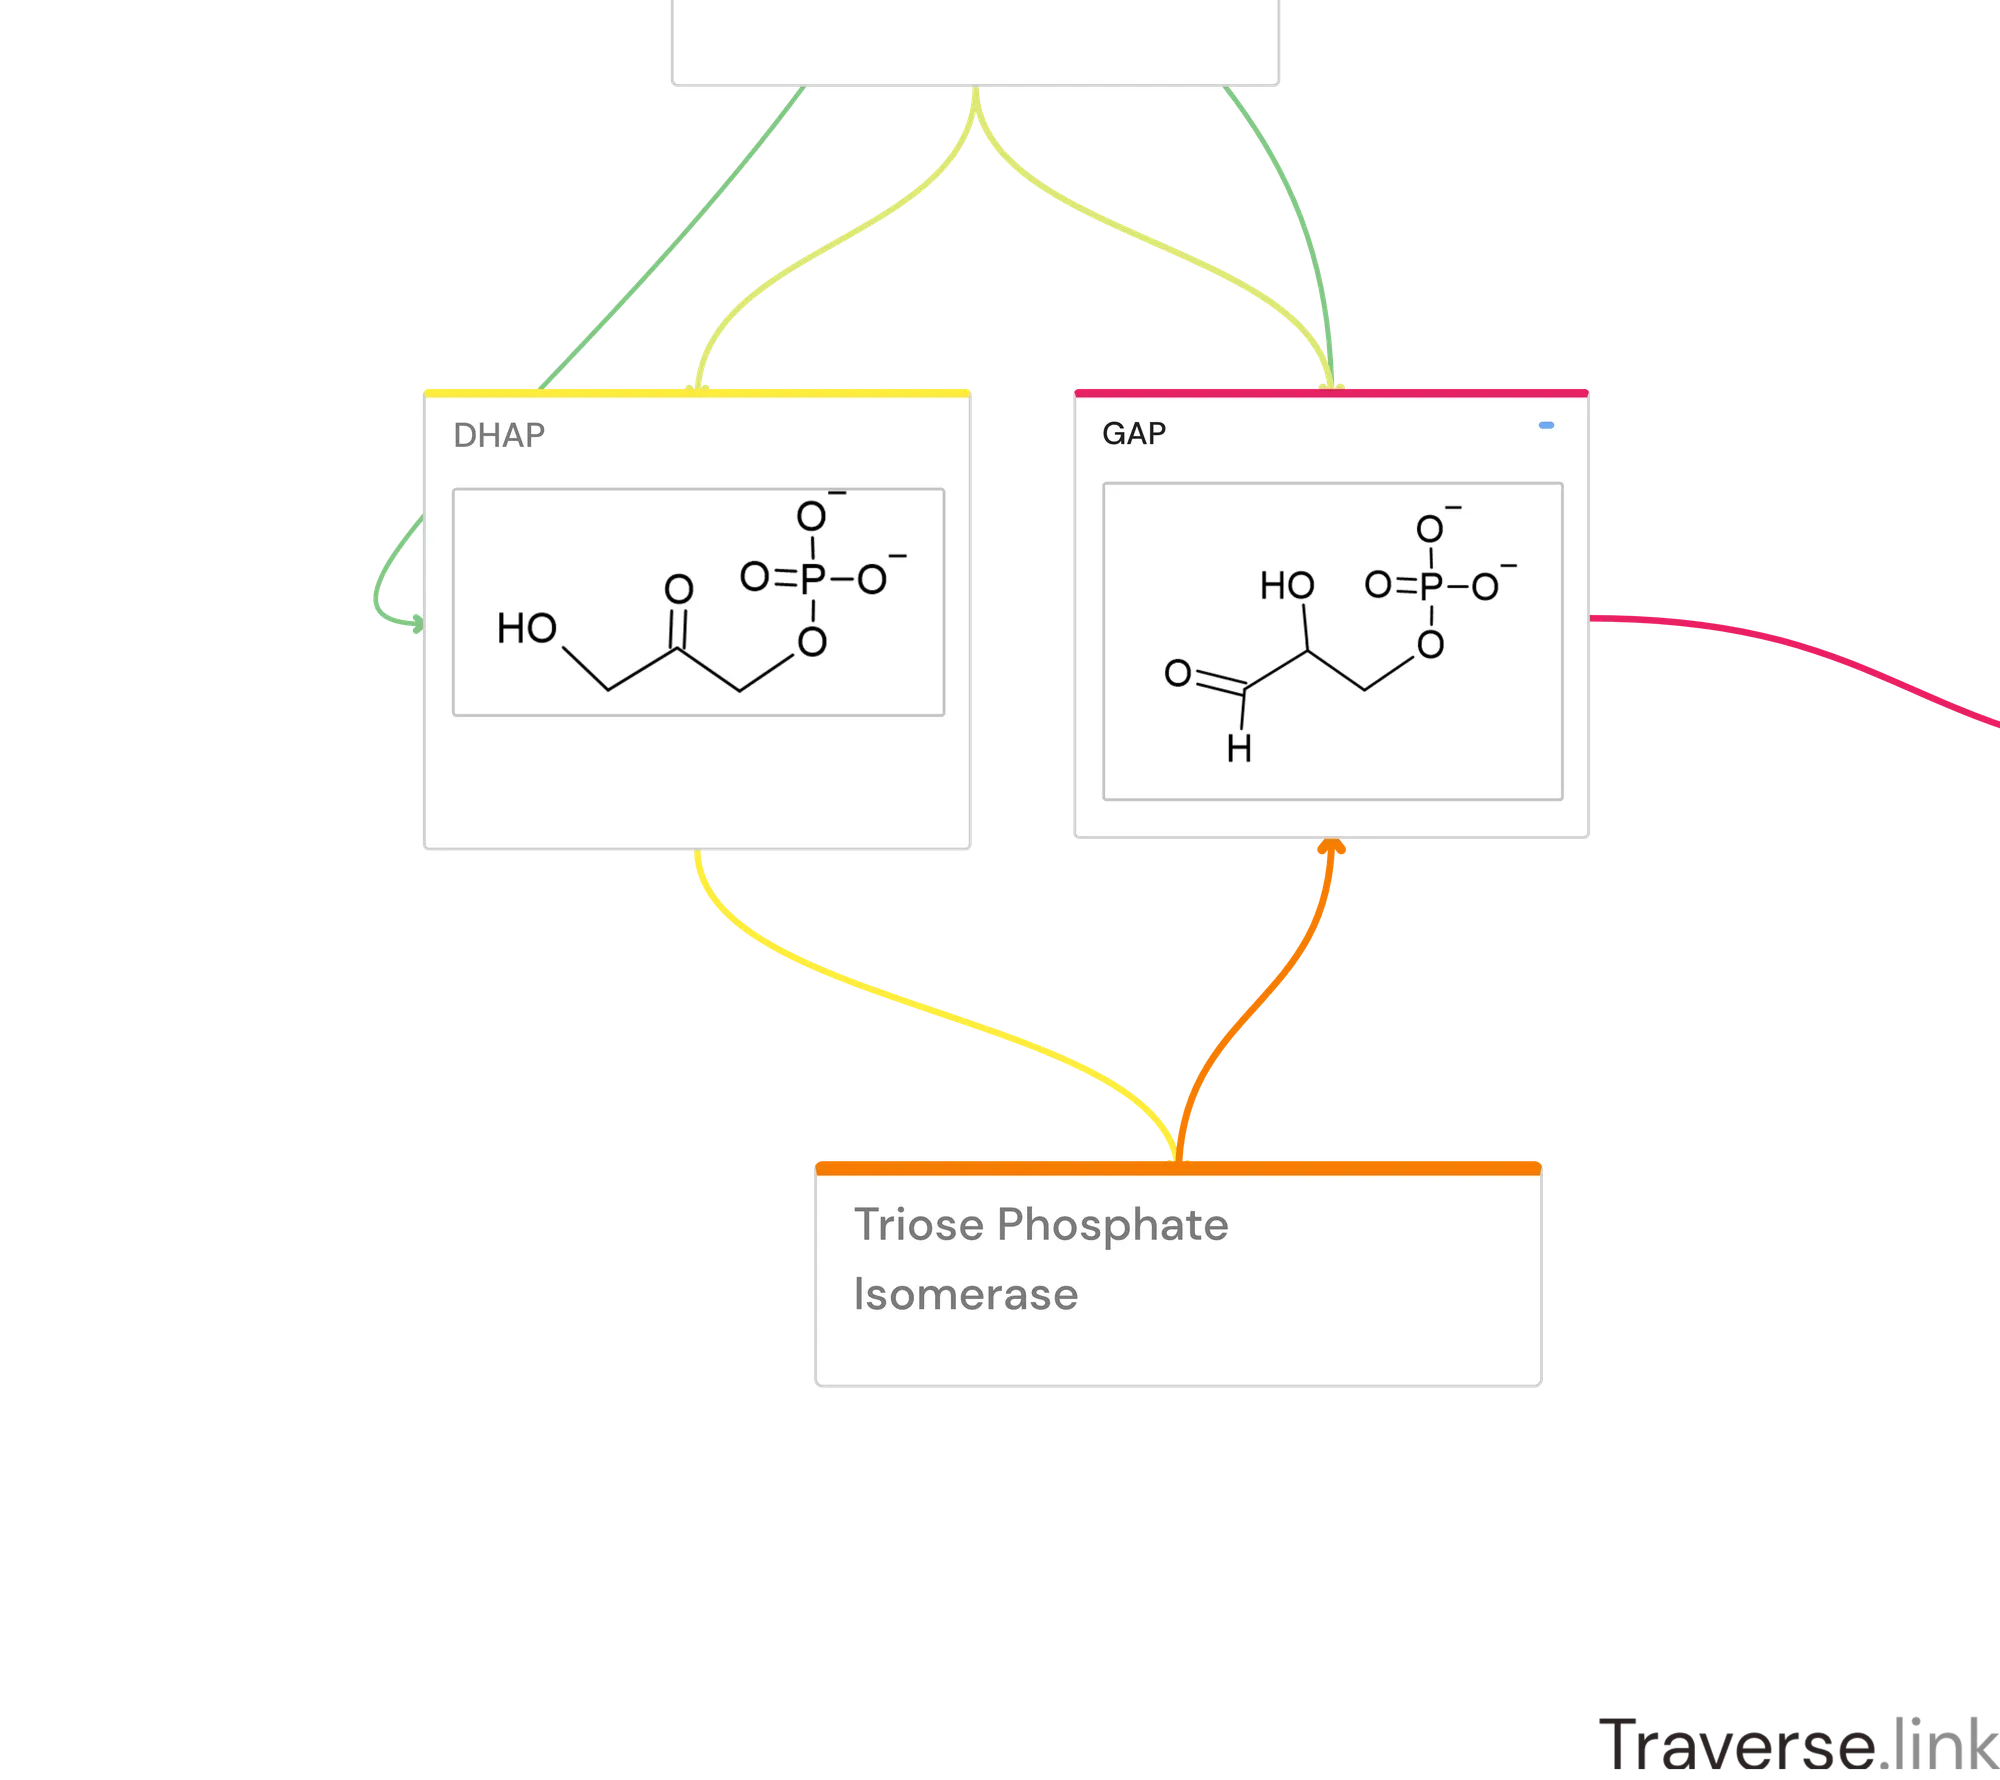 Glycolysis pathway Step 5: Triosephosphate Isomerase